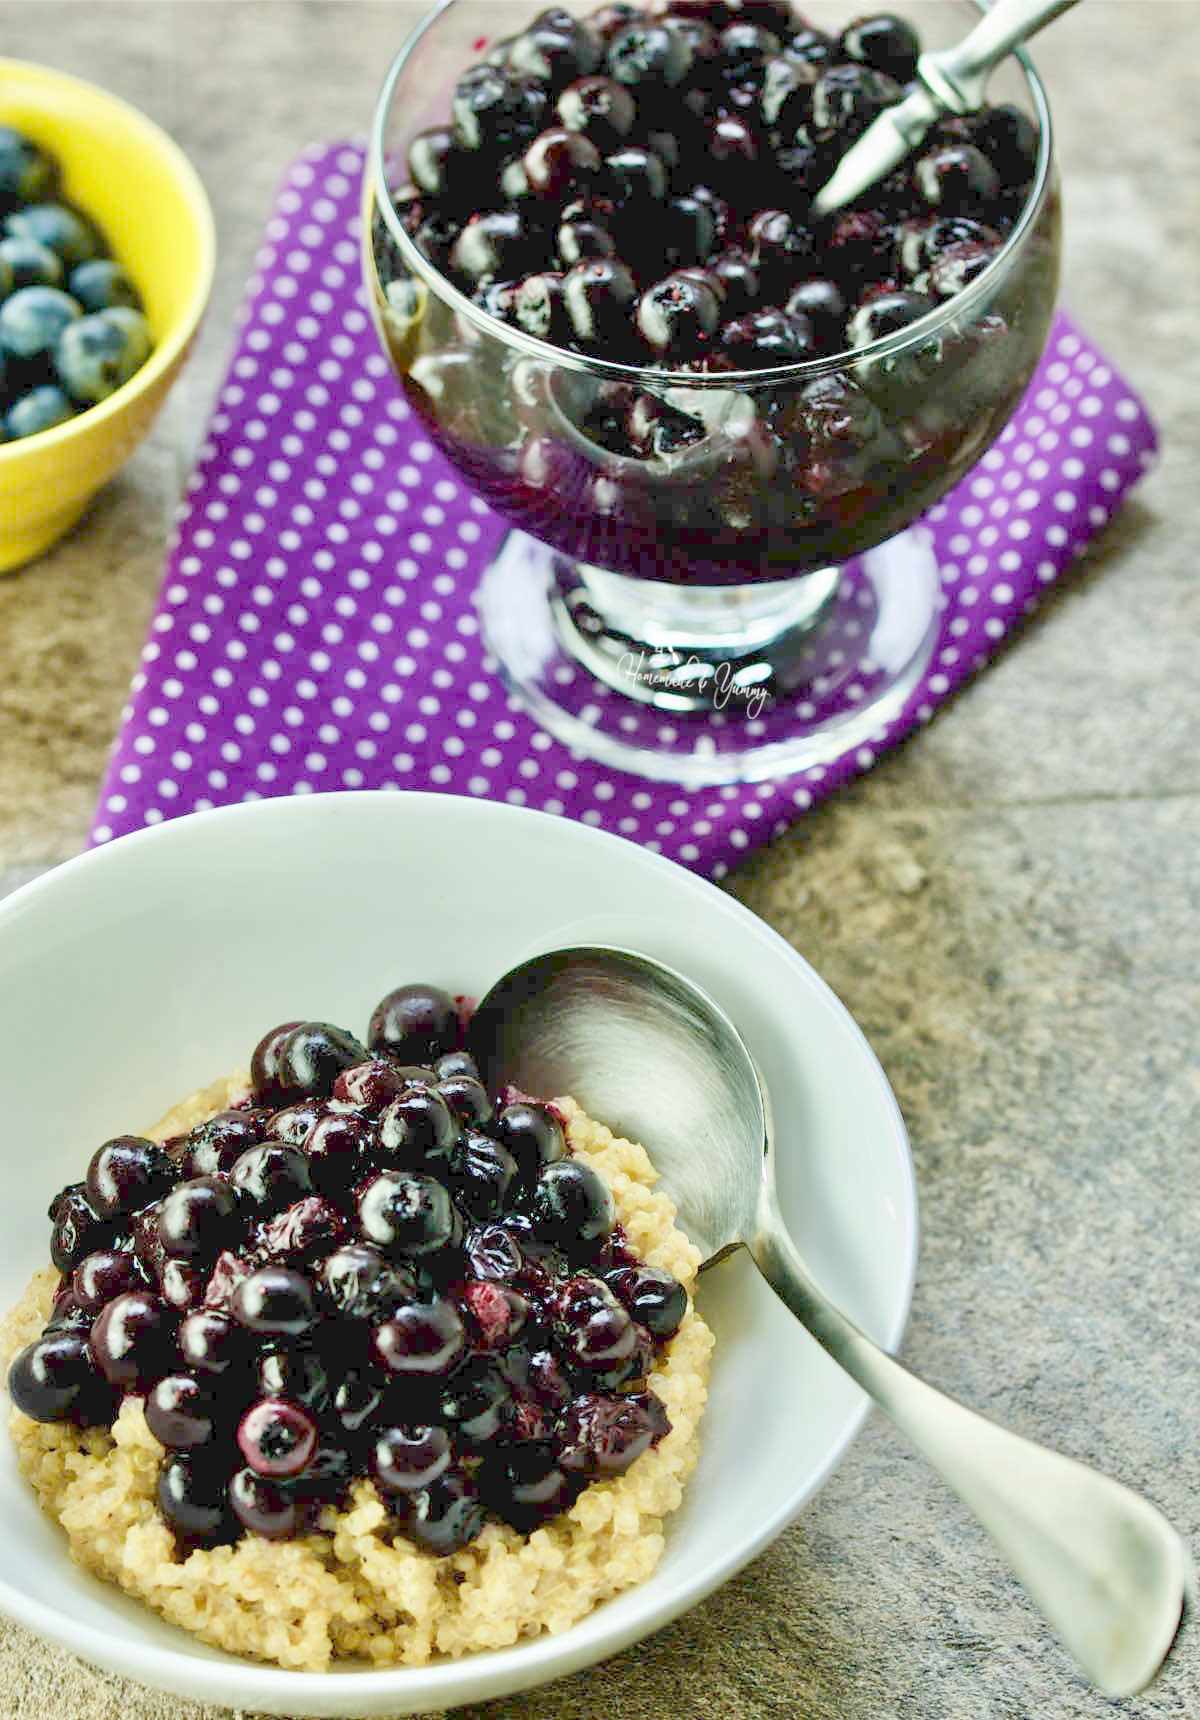 Blueberry compote over quinoa porridge.